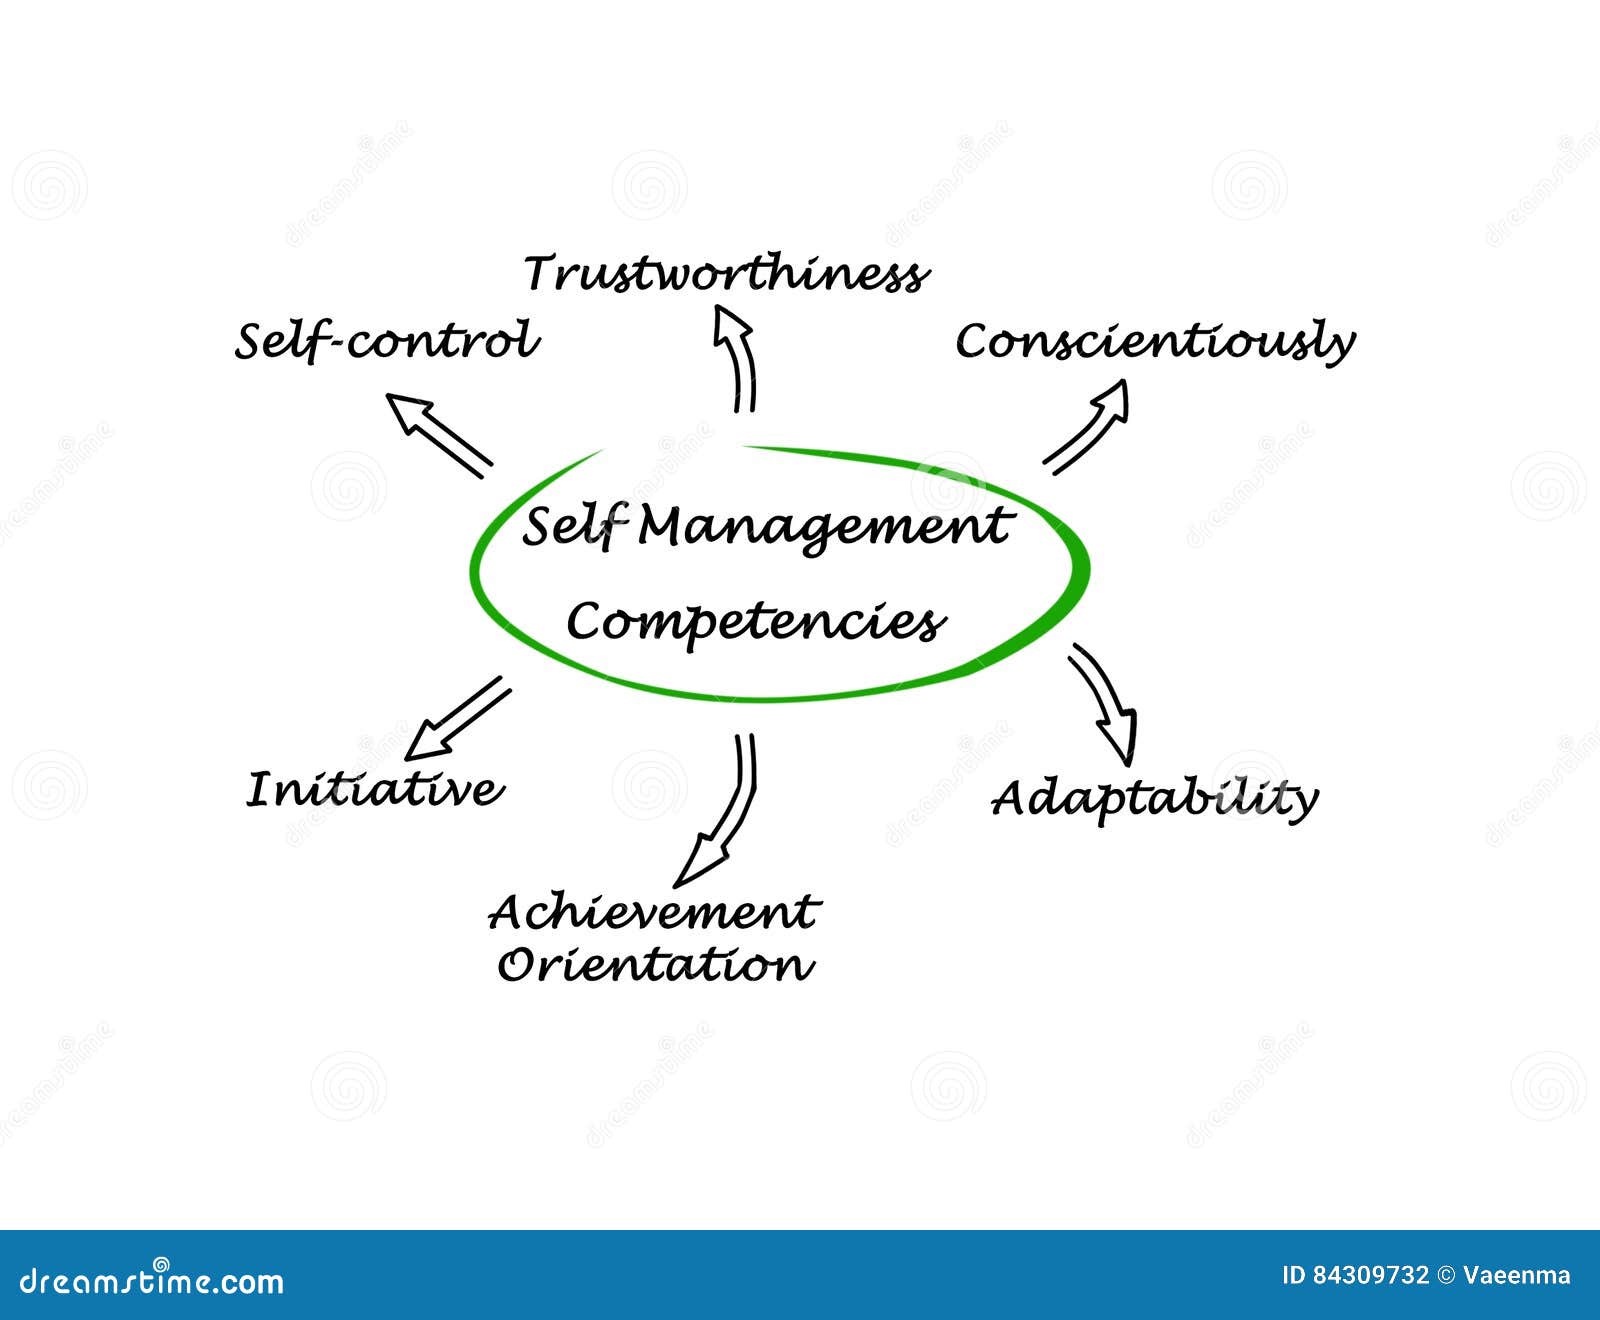 self management competencies